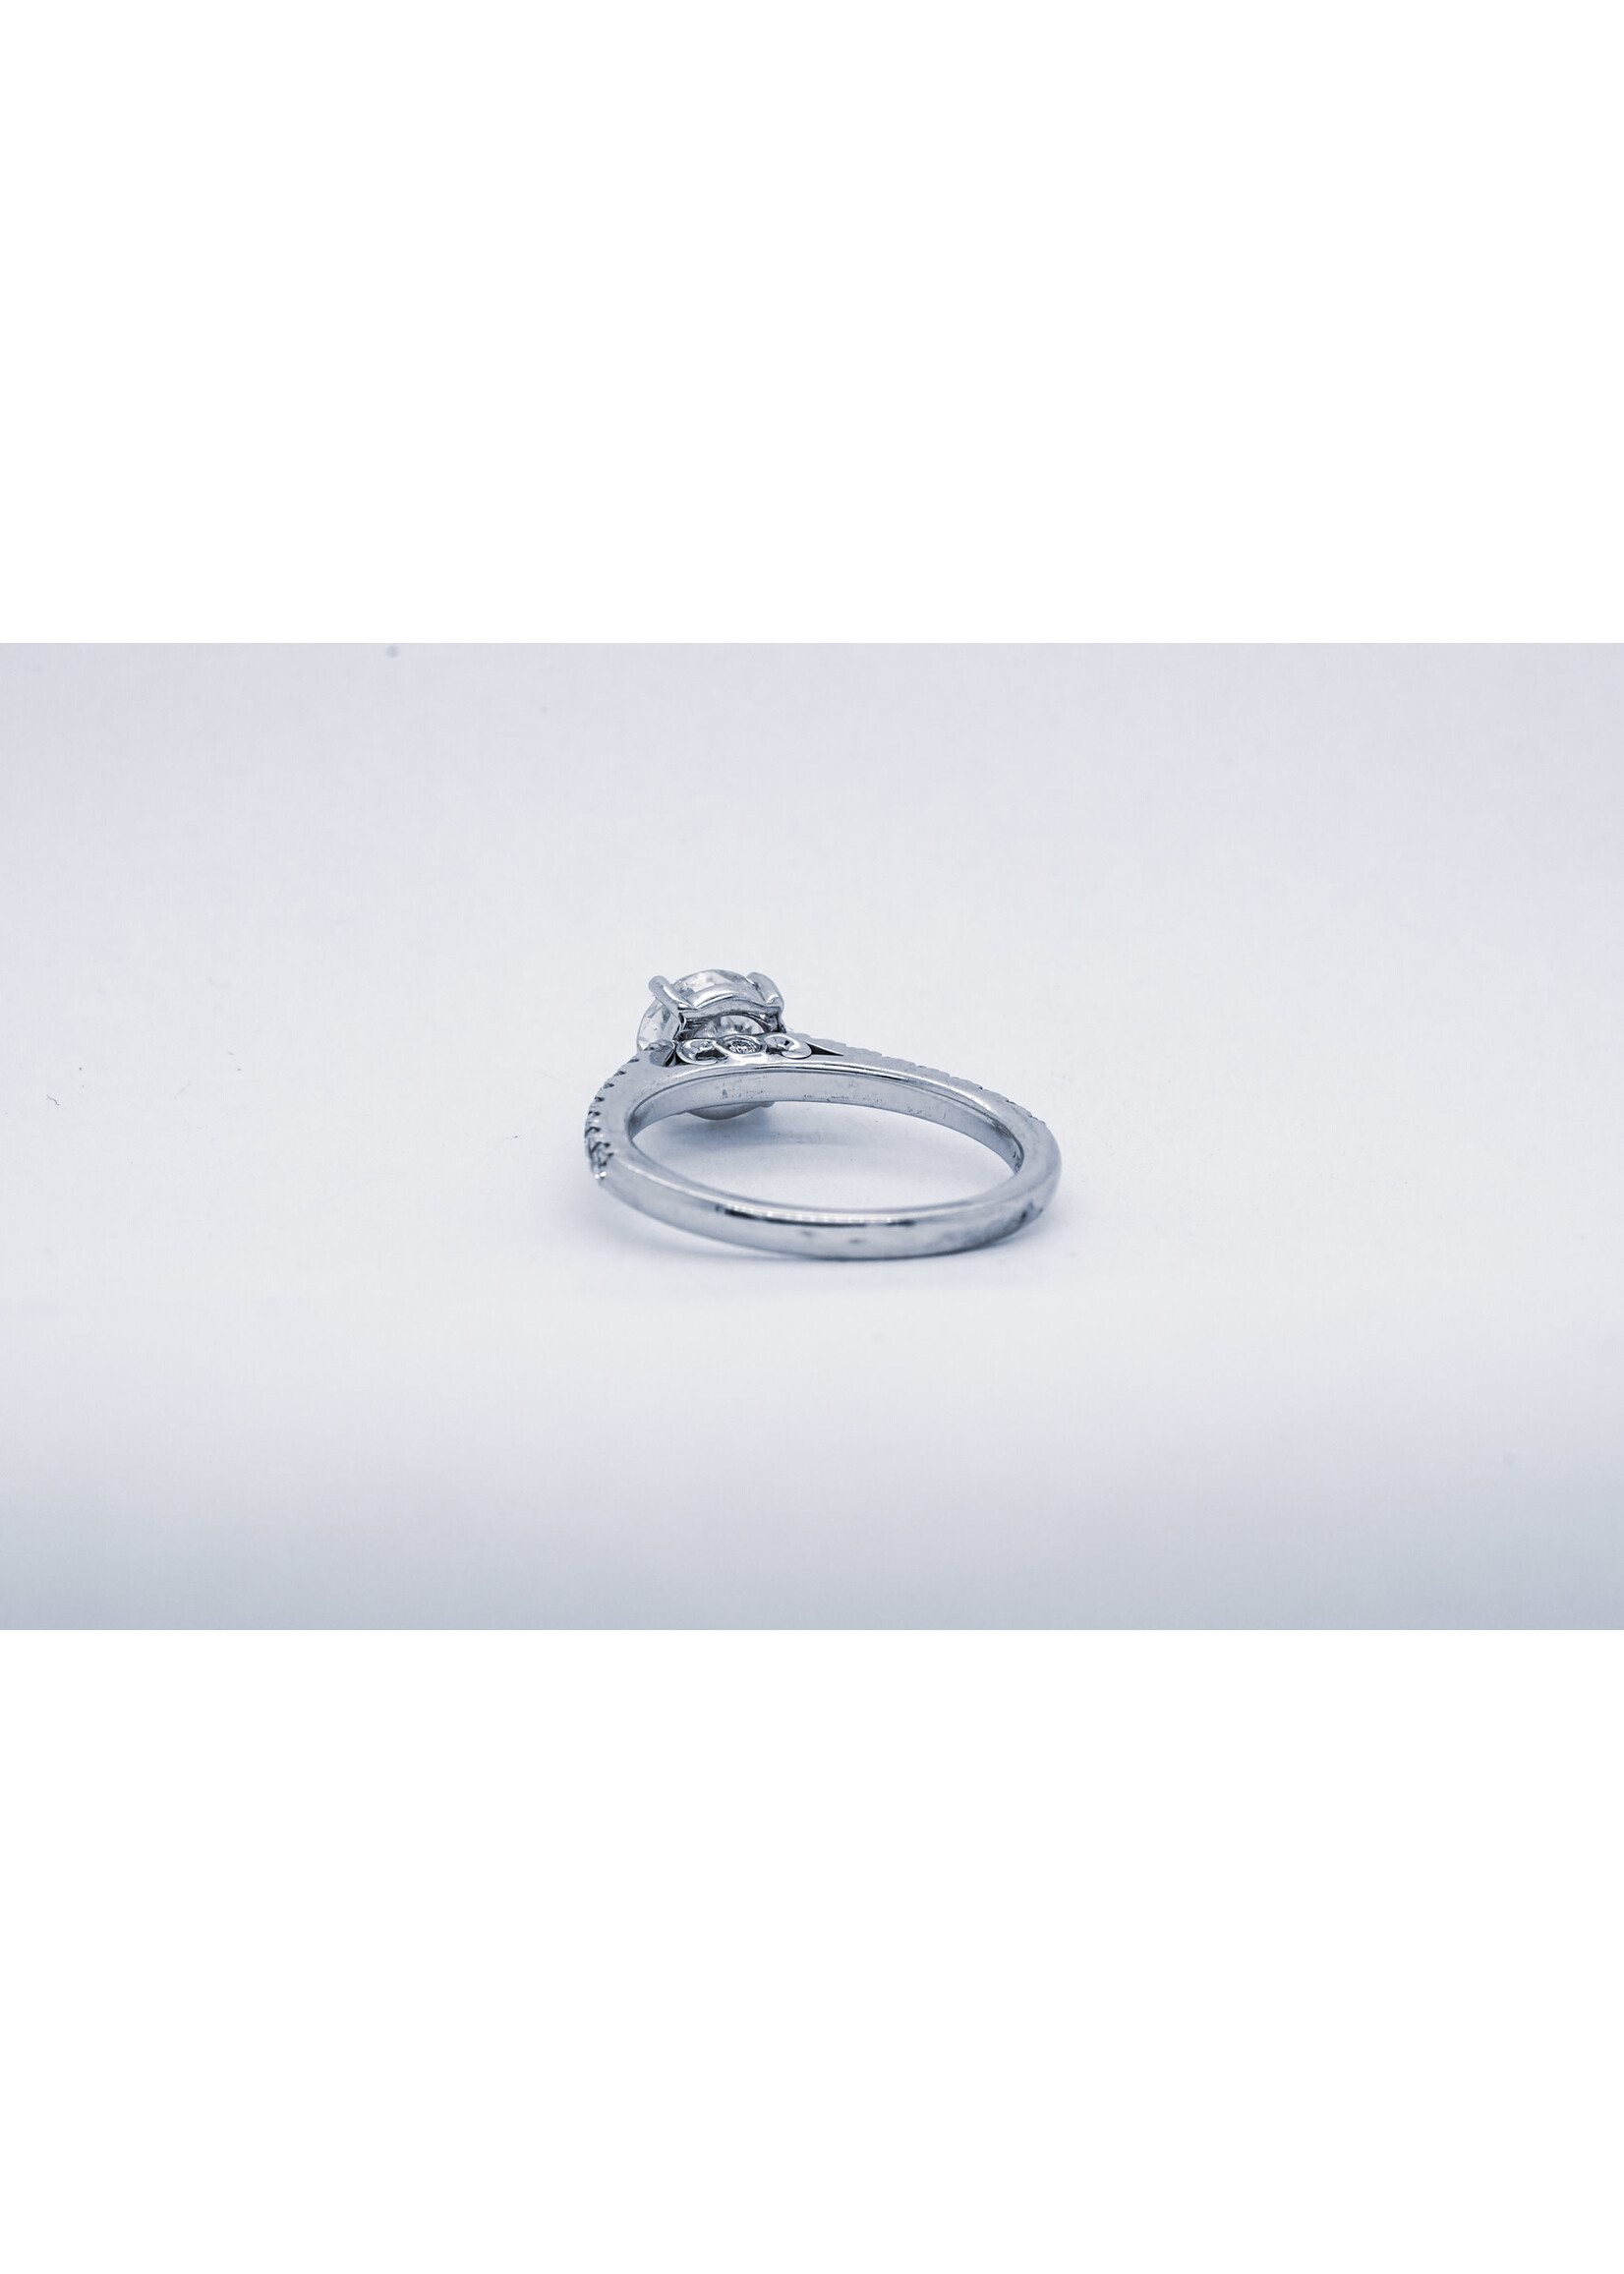 AITT-18KW 3.81g 1.36ctw (.96ctr) H/SI2 Old European Cut Round Diamond Engagement Ring (size 6.75)